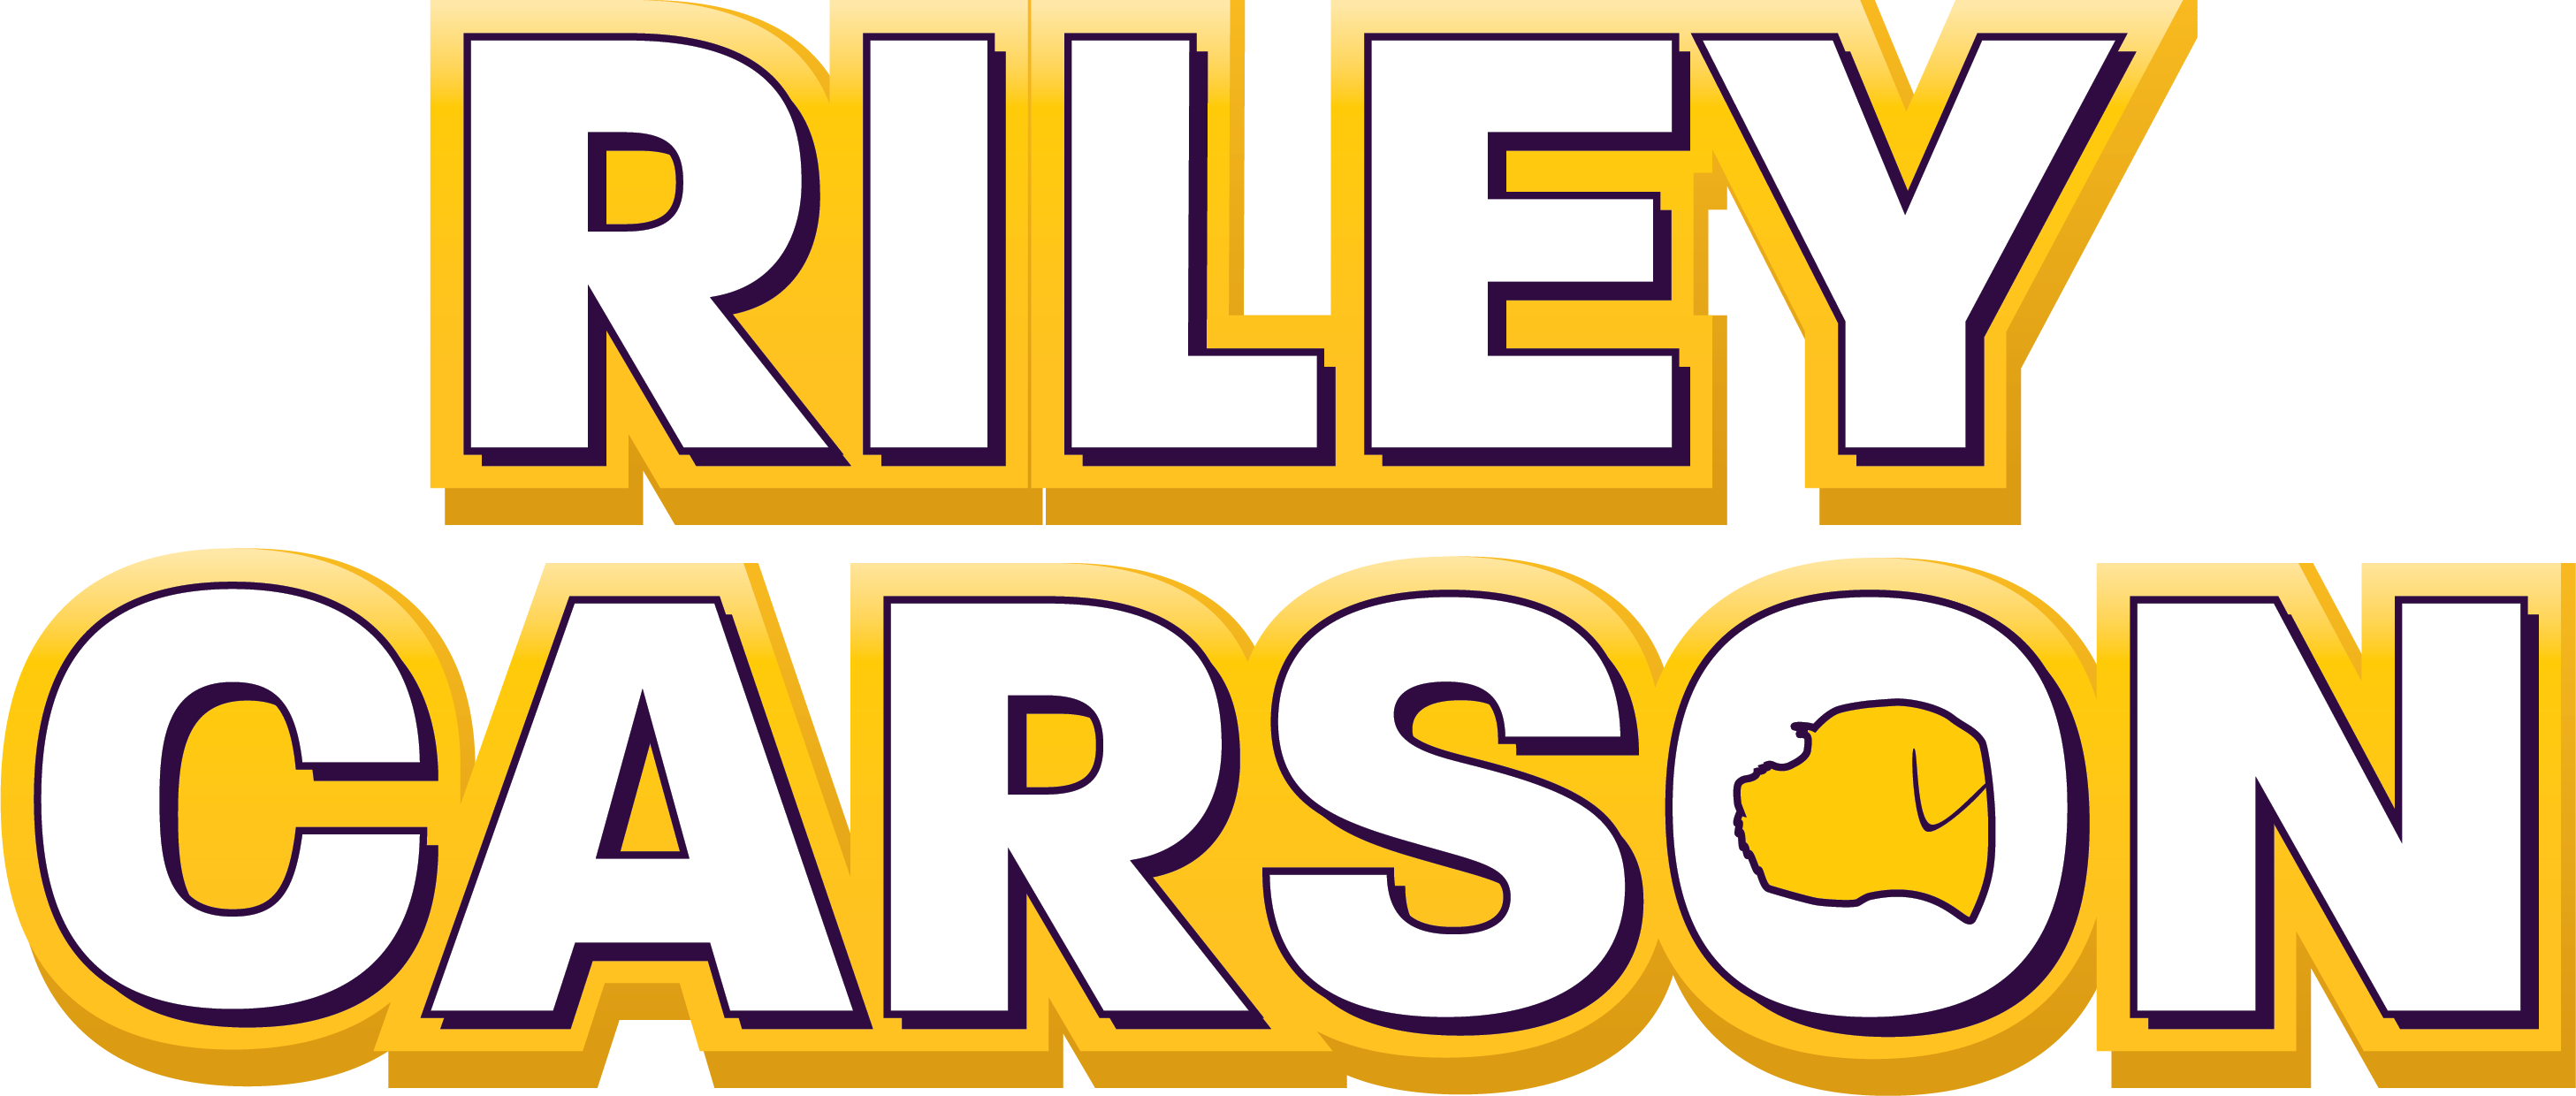 Riley Carson Series